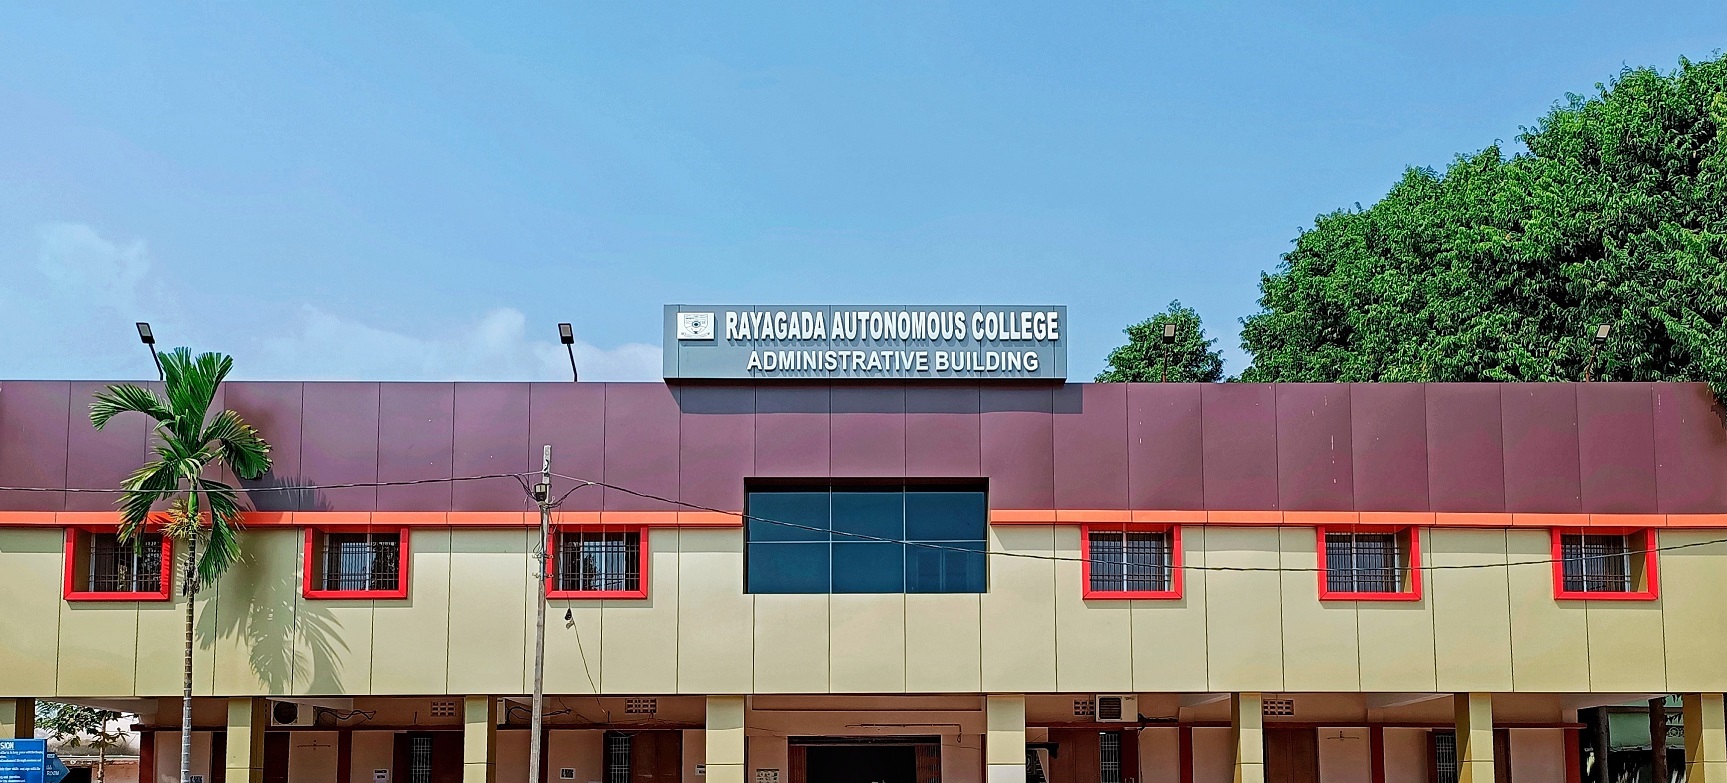 pulp and paper research institute rayagada